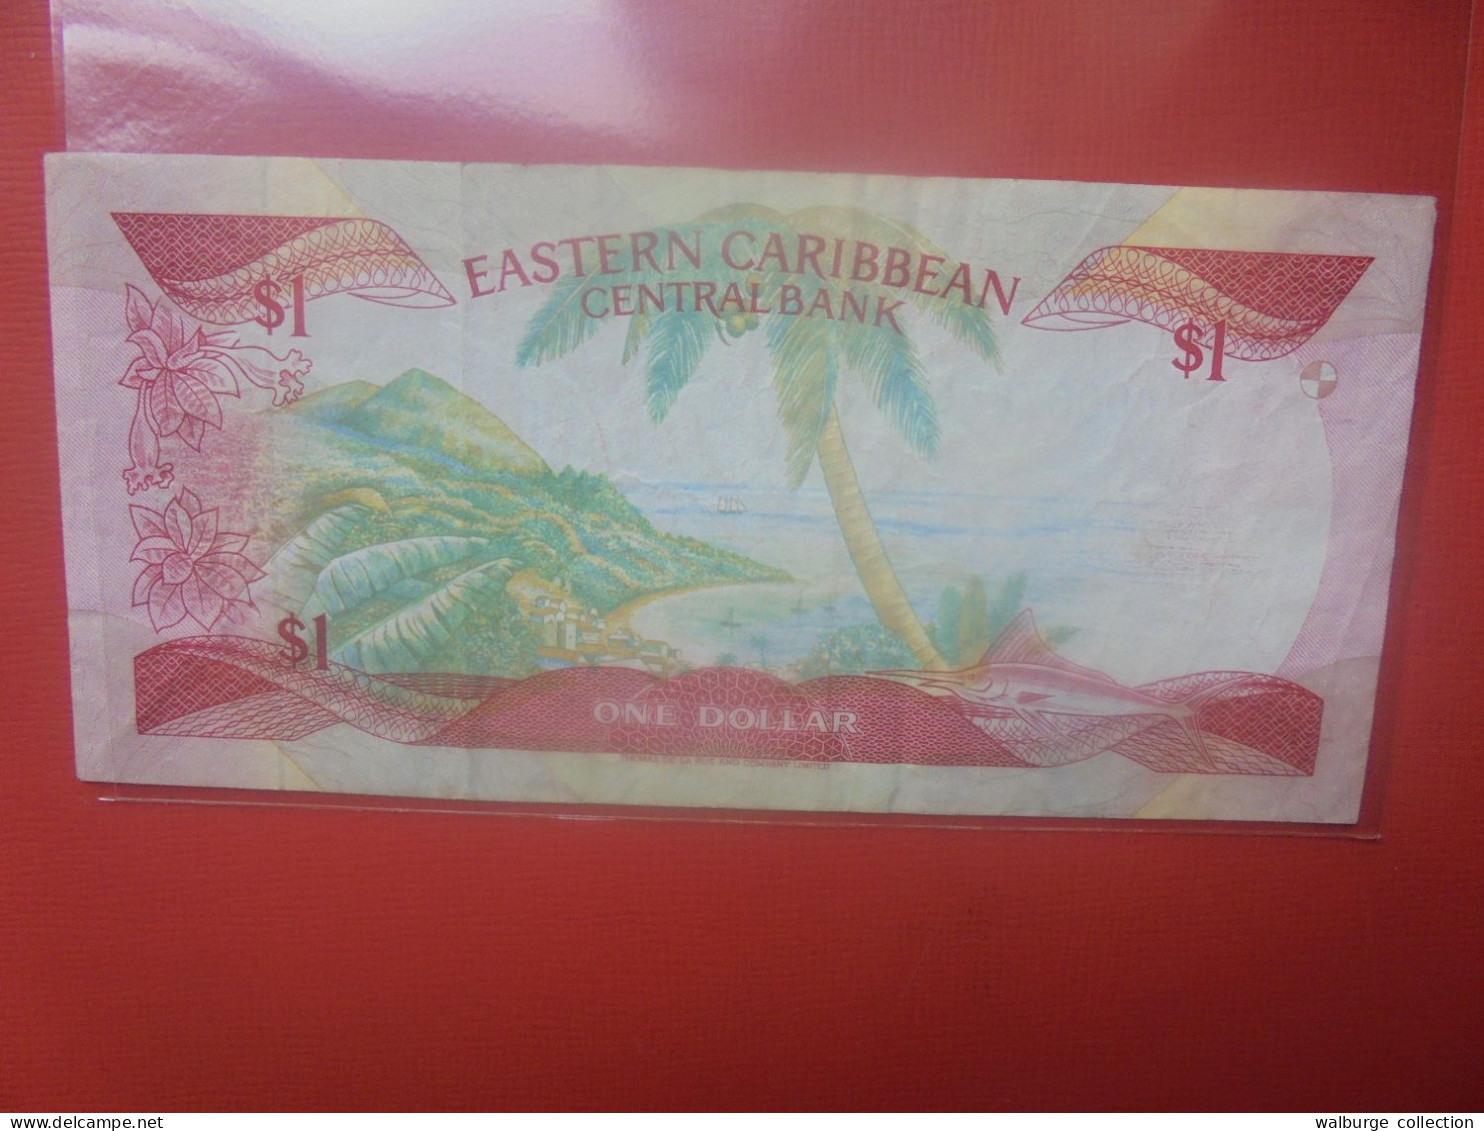 EAST-CARAIBES 1$ ND (1985-88) Circuler (B.29) - Caraïbes Orientales